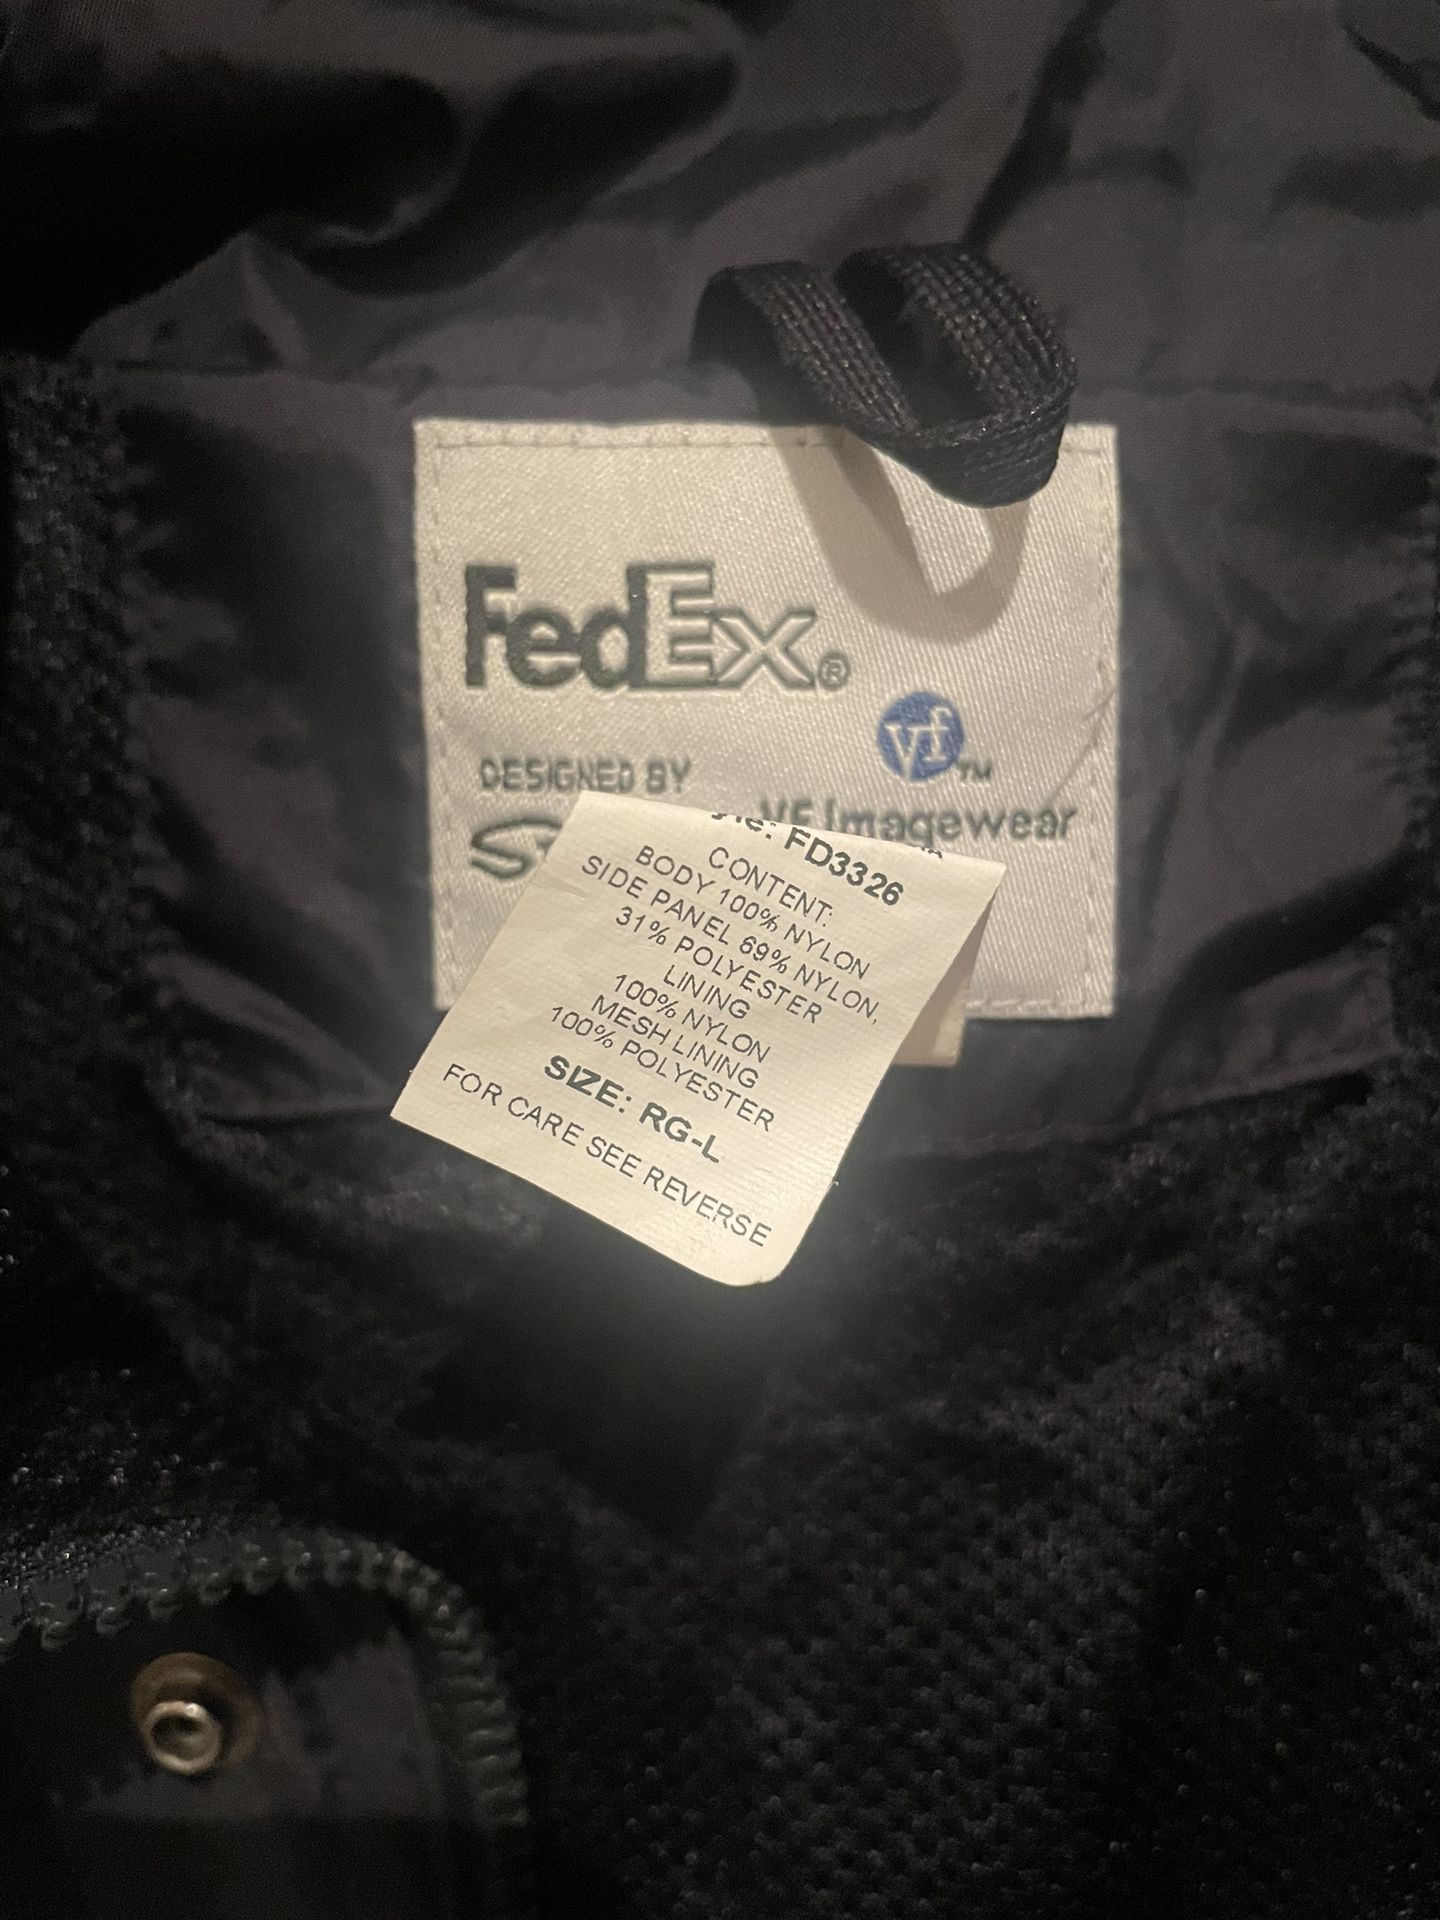 Winter Jacket FedEx